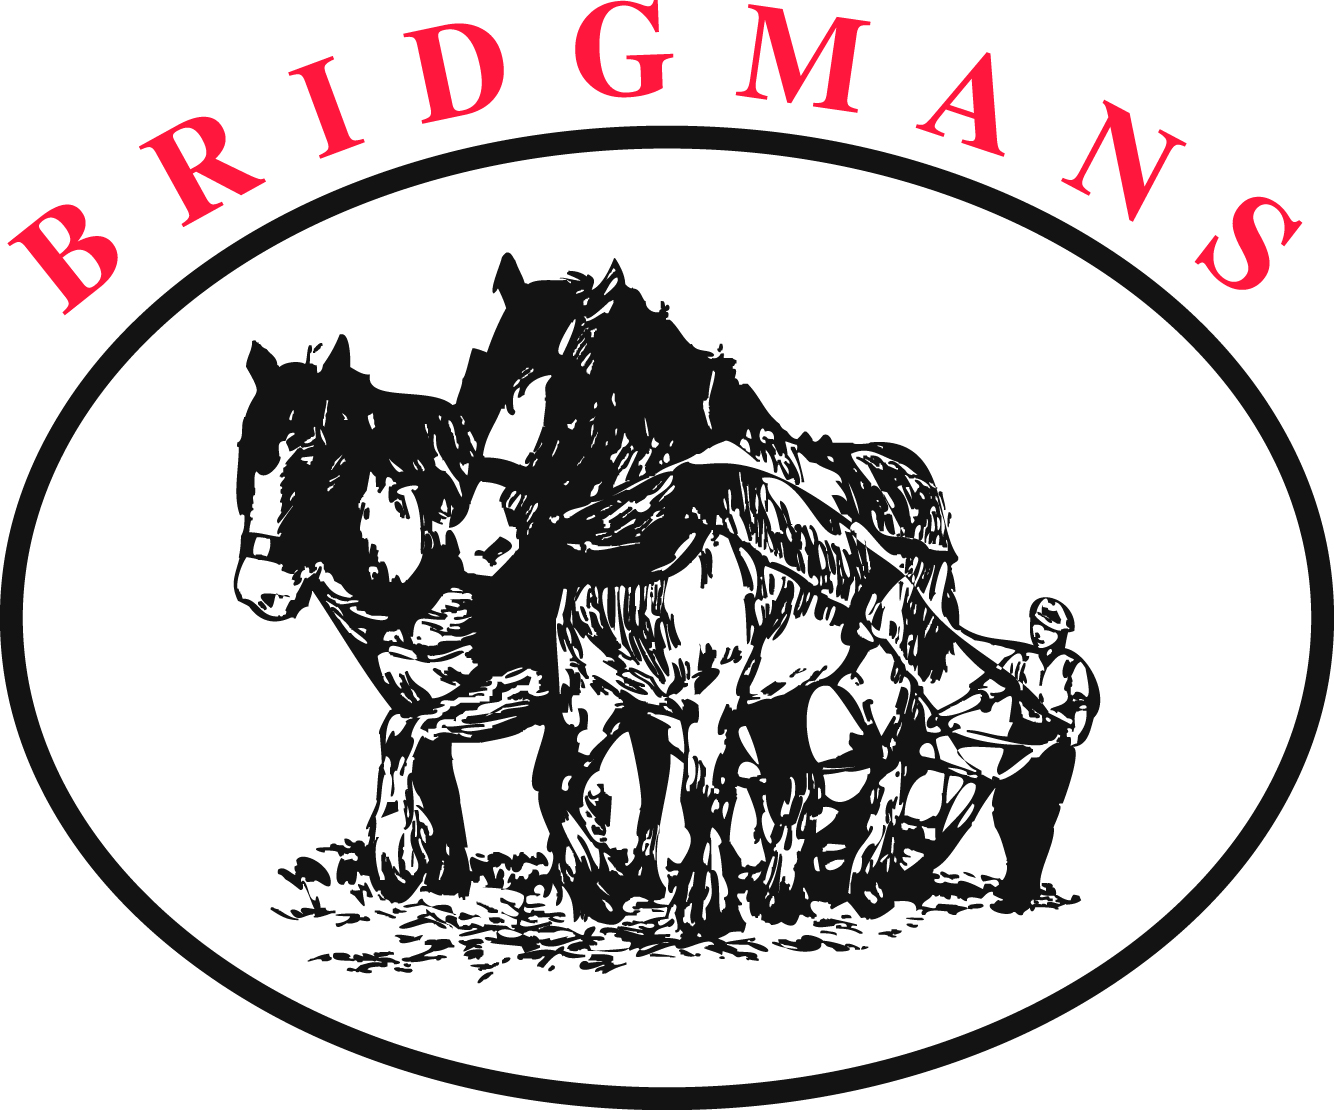 Bridgmans logo new colour.jpg